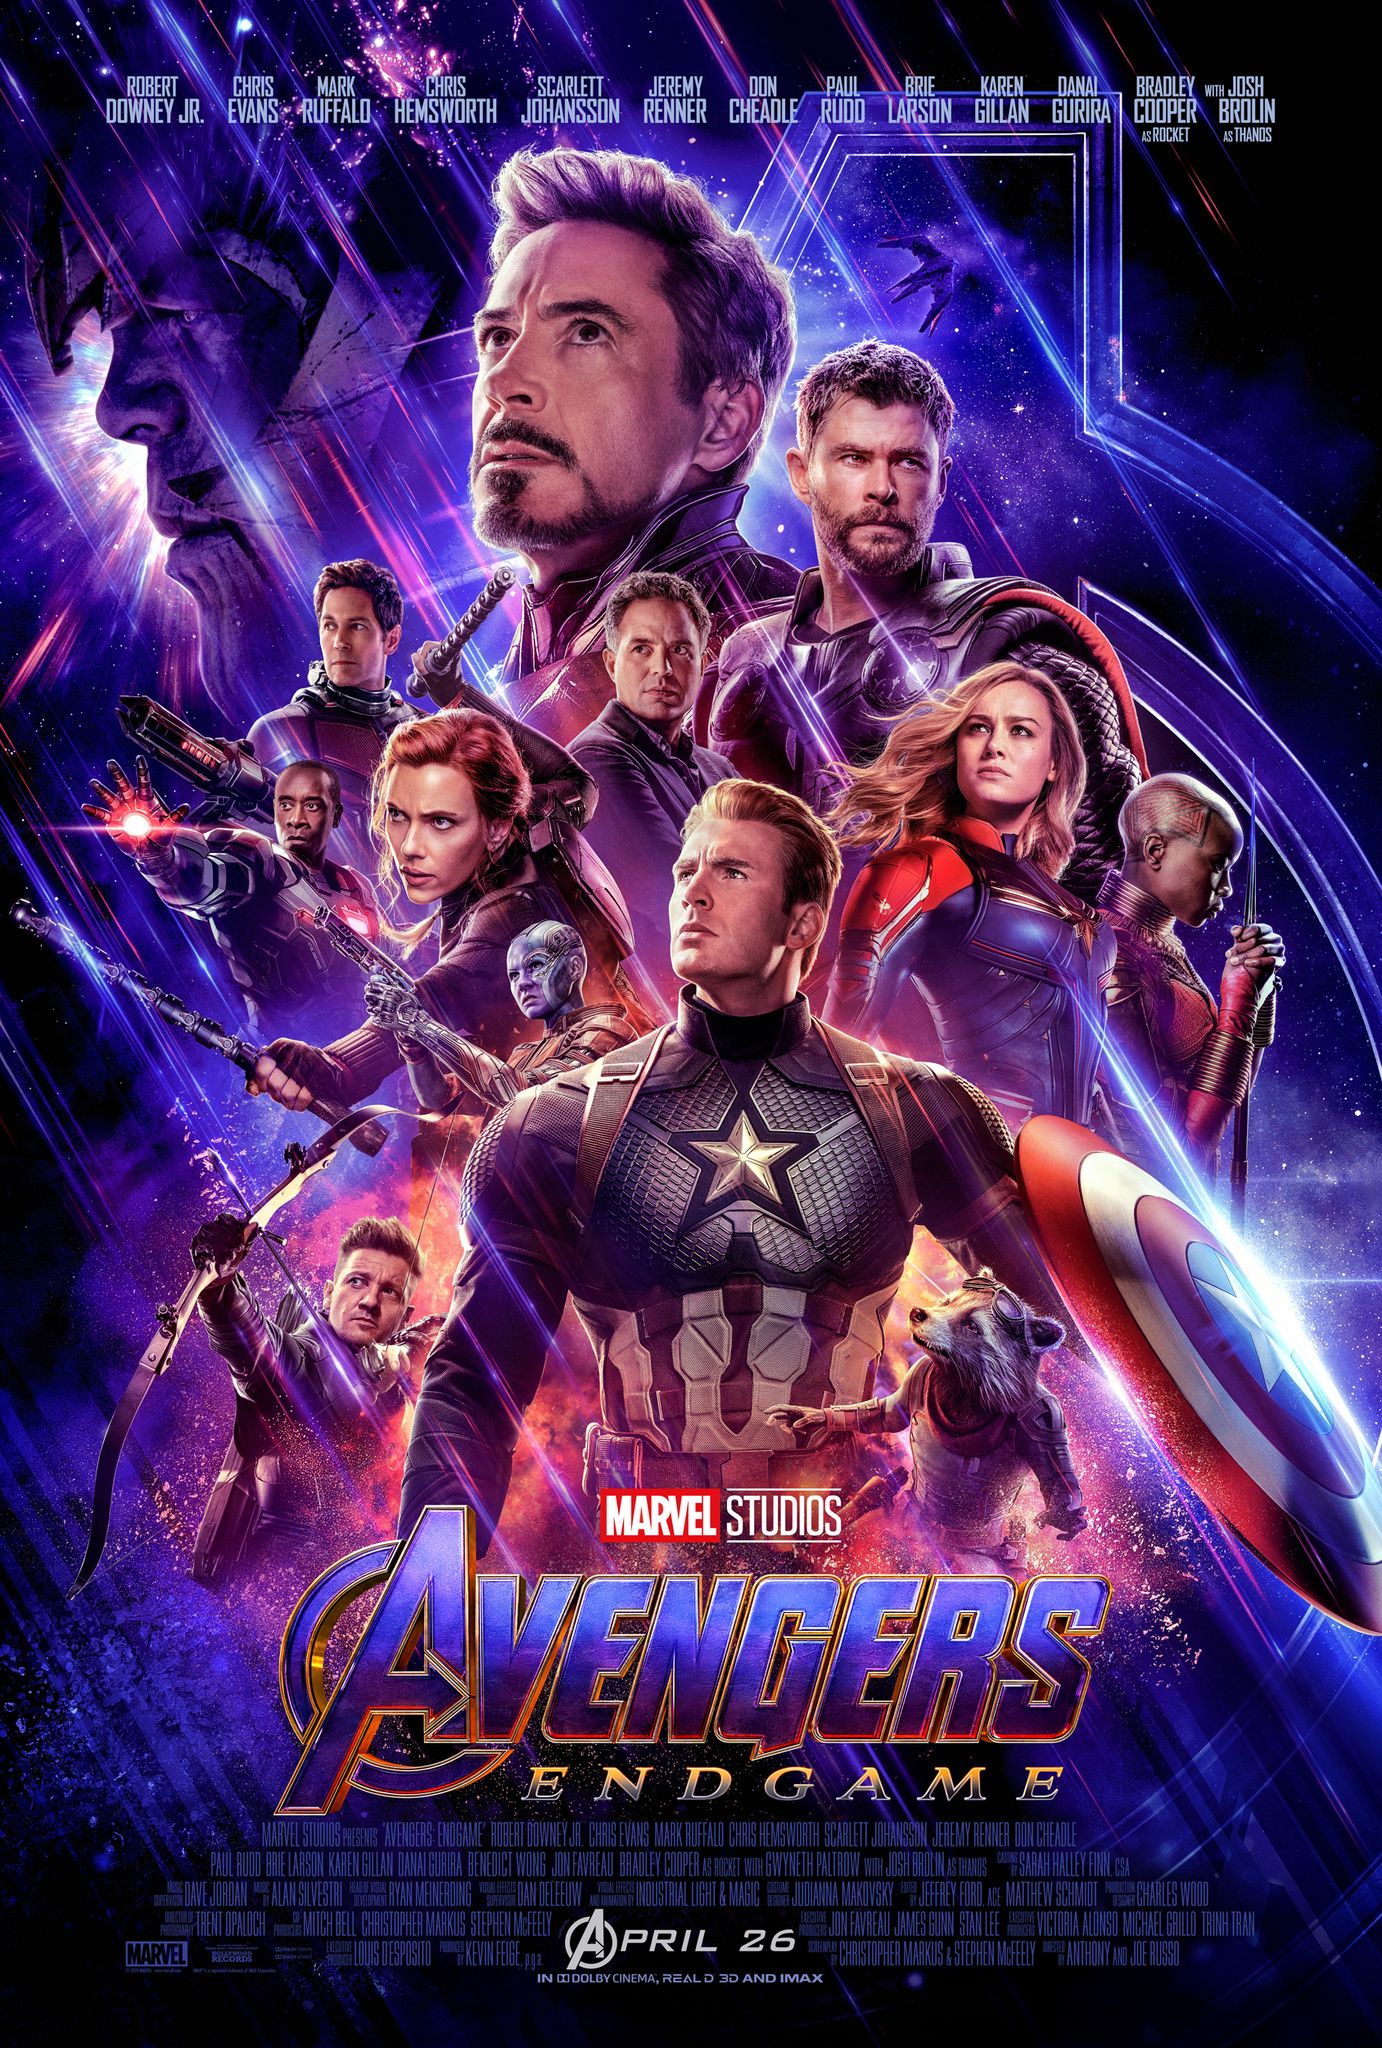 Avengers Endgame (2019) Hindi Dubbed Full Movie